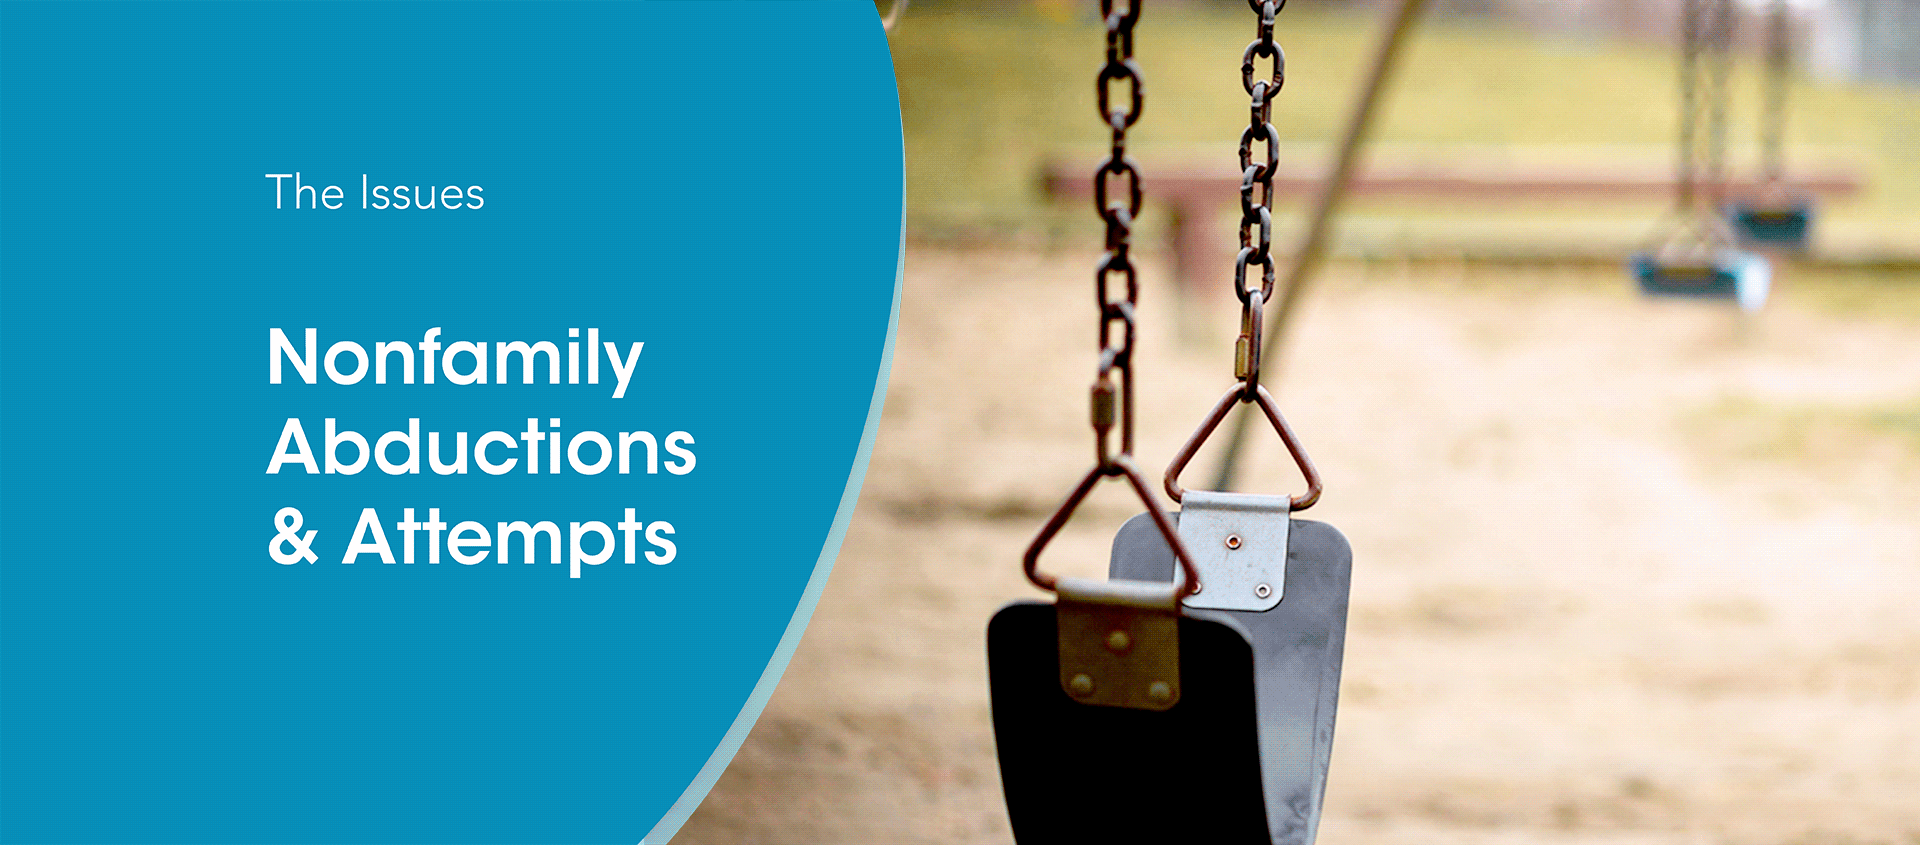 Non-family Abductions